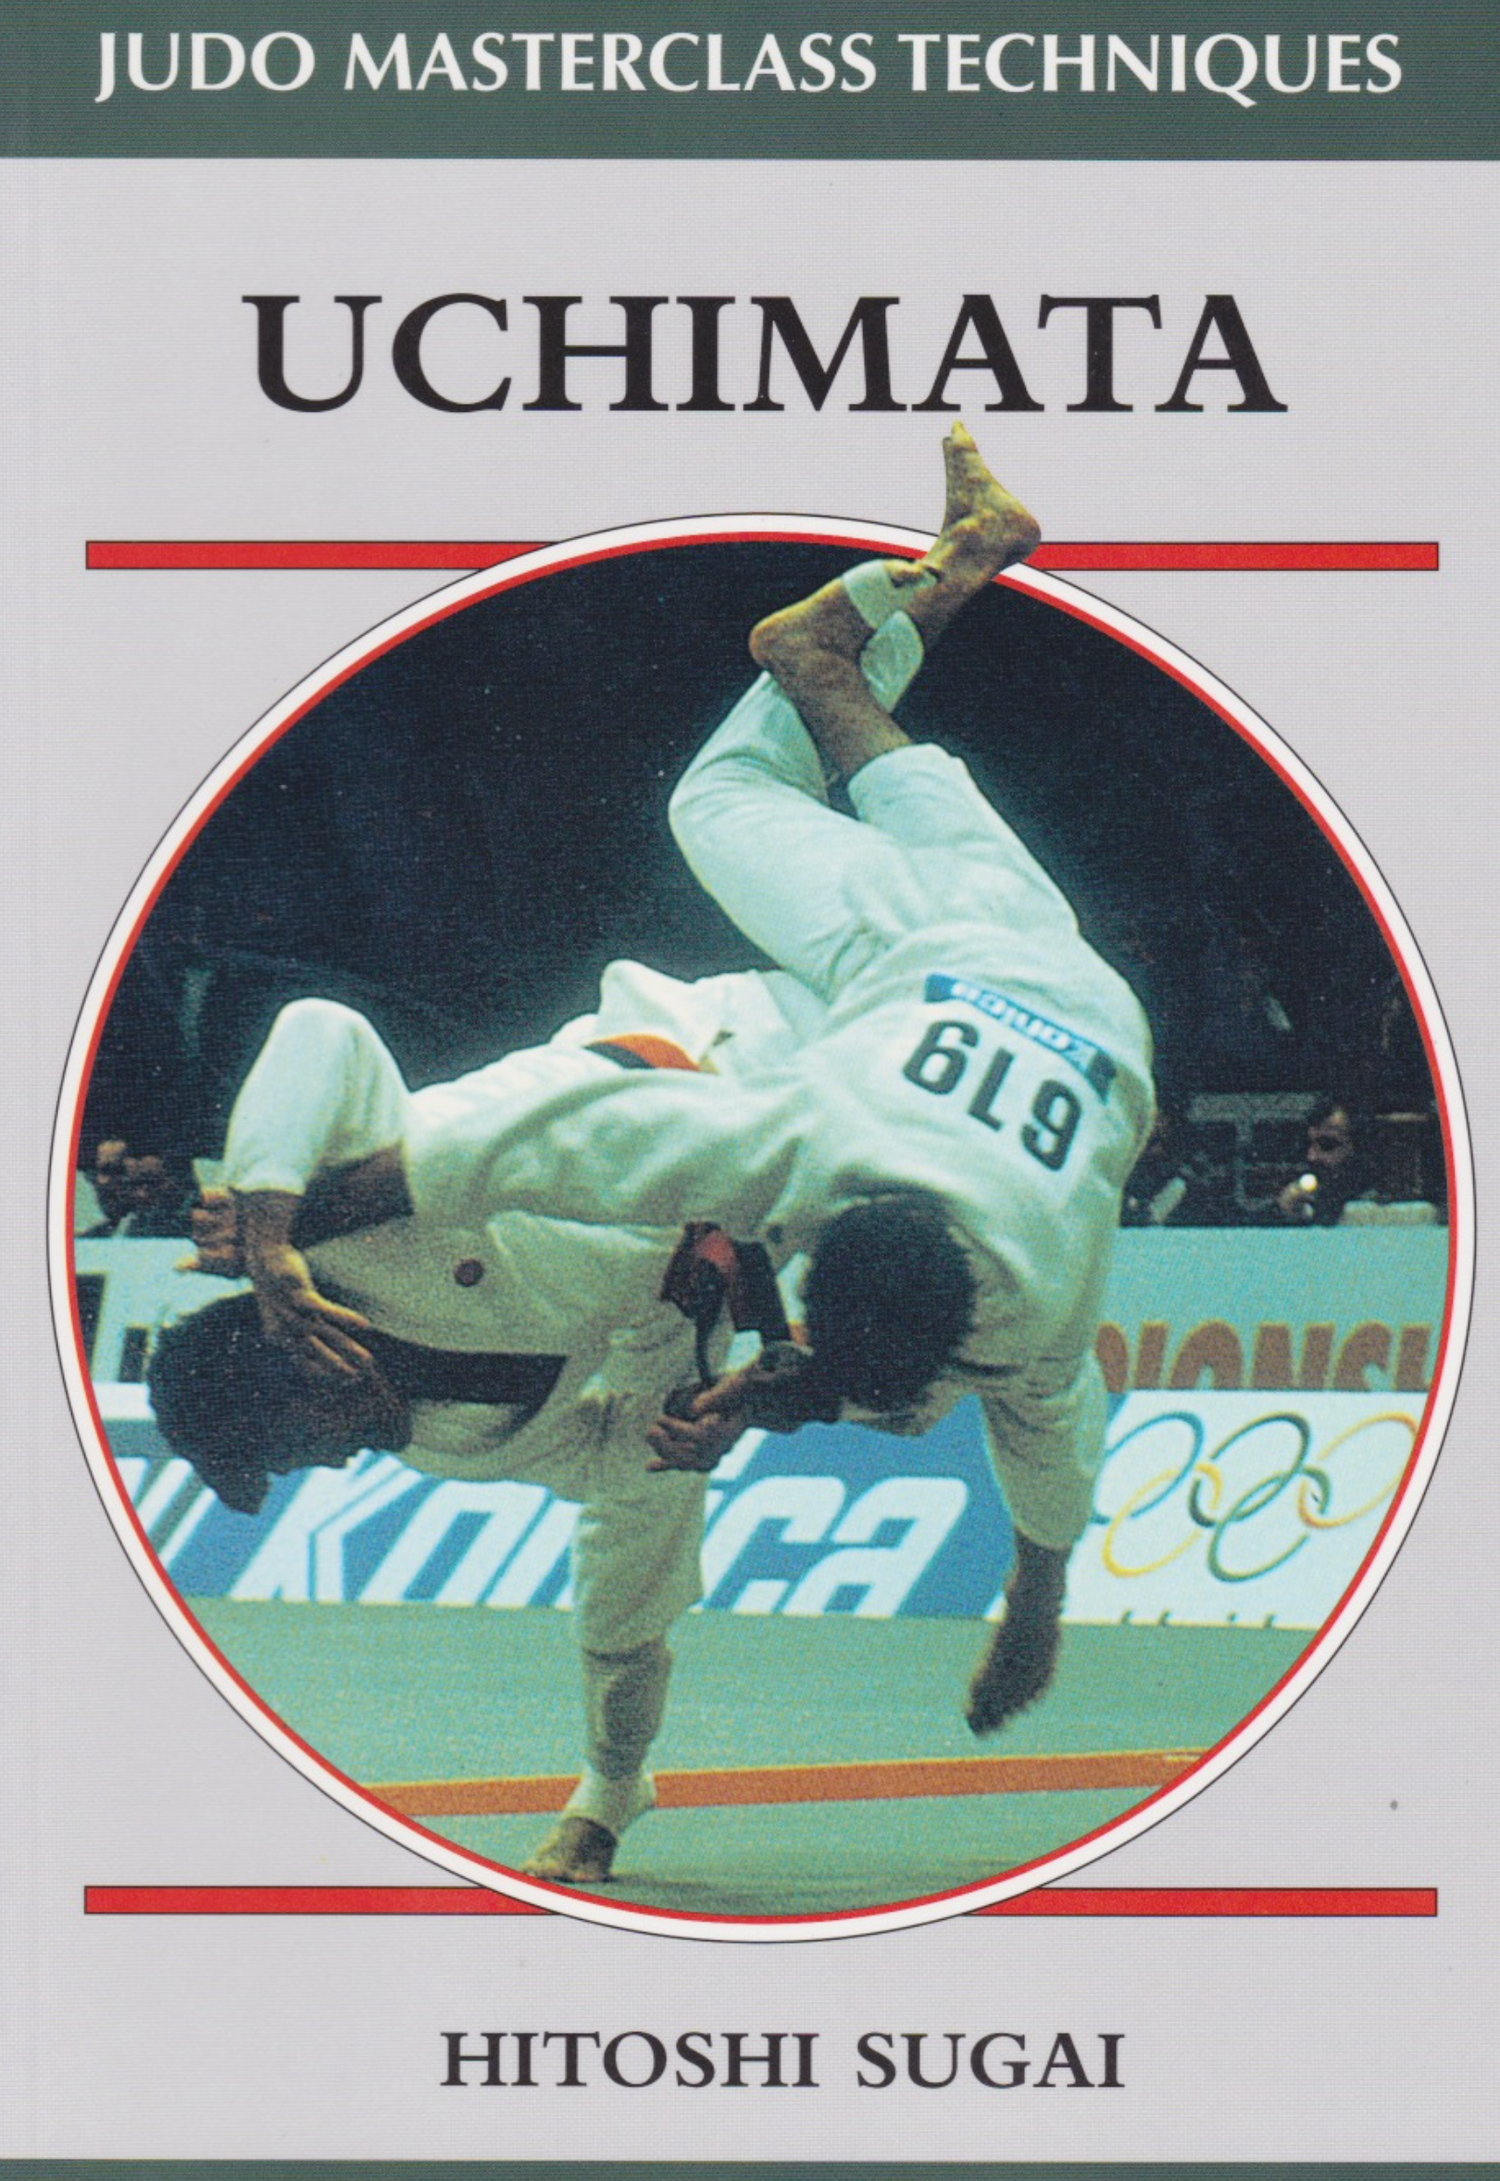 Uchimata: Judo Masterclass Book by Hitoshi Sugai - Budovideos Inc